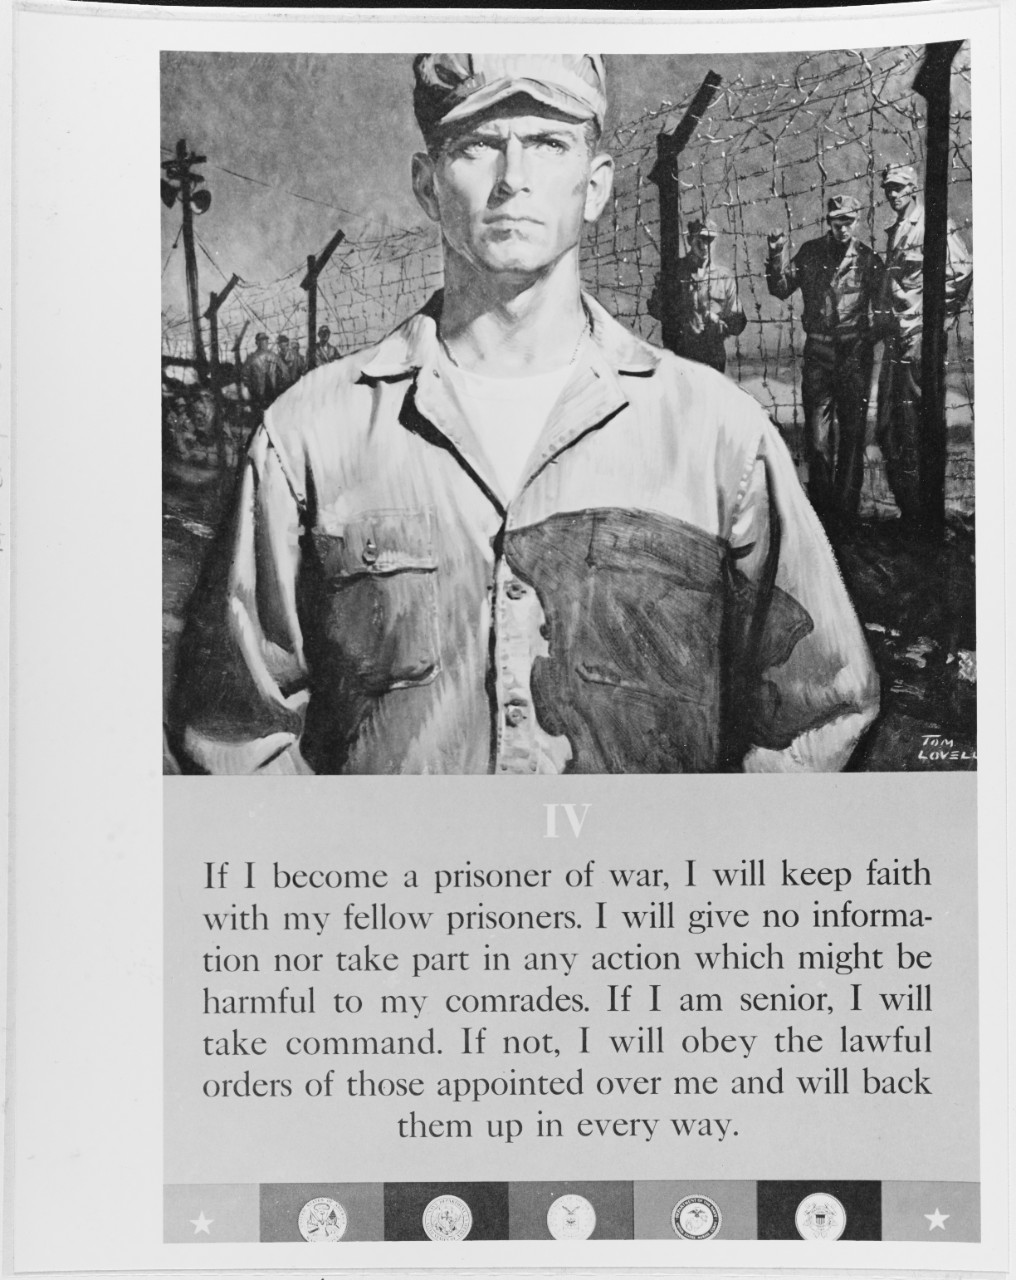 Prisoner of War Code of Conduct Poster #4